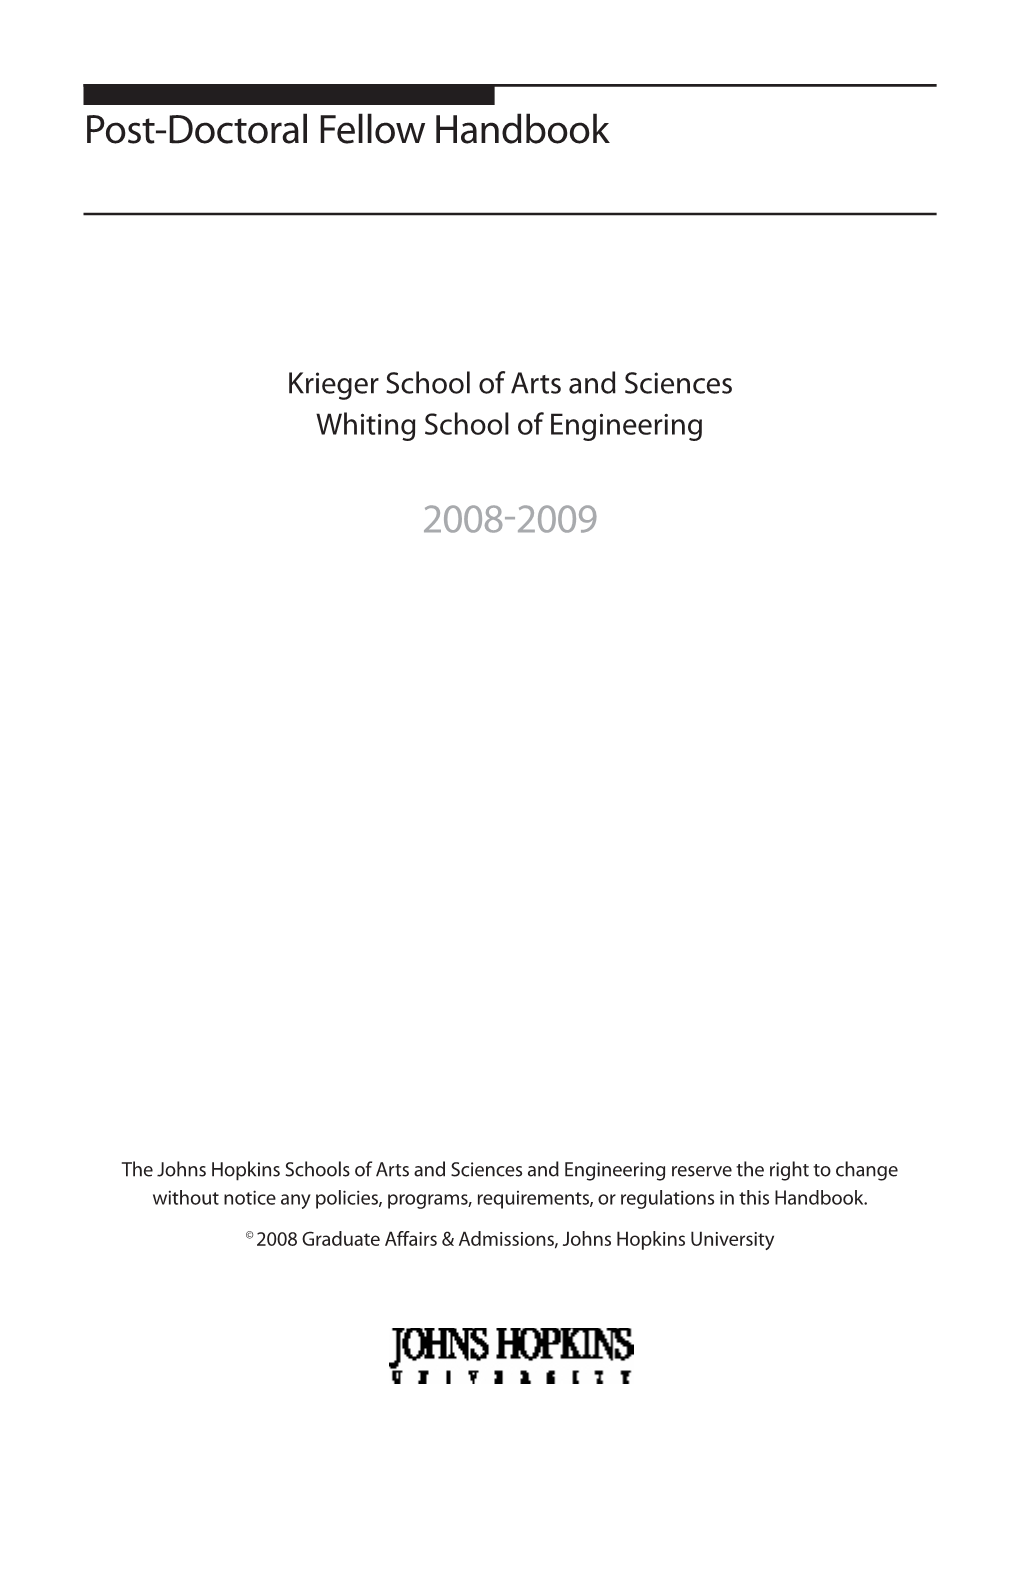 Post-Doctoral Fellow Handbook 2008-2009